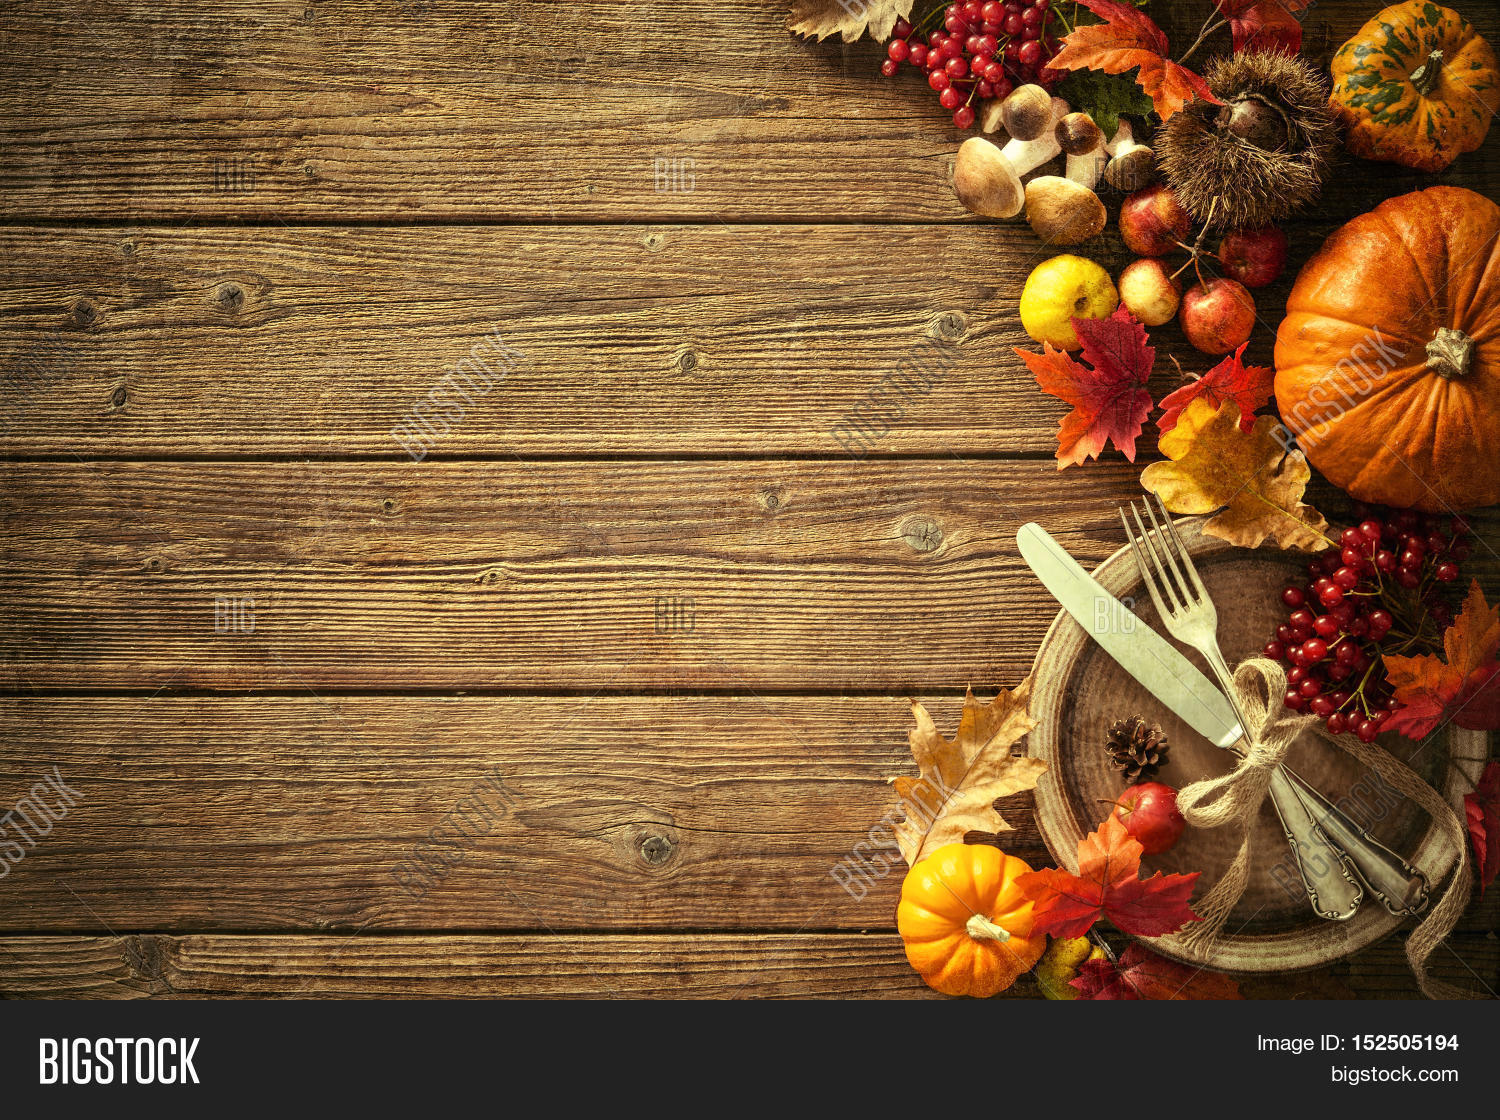 Autumn Background Image Photo Trial Bigstock